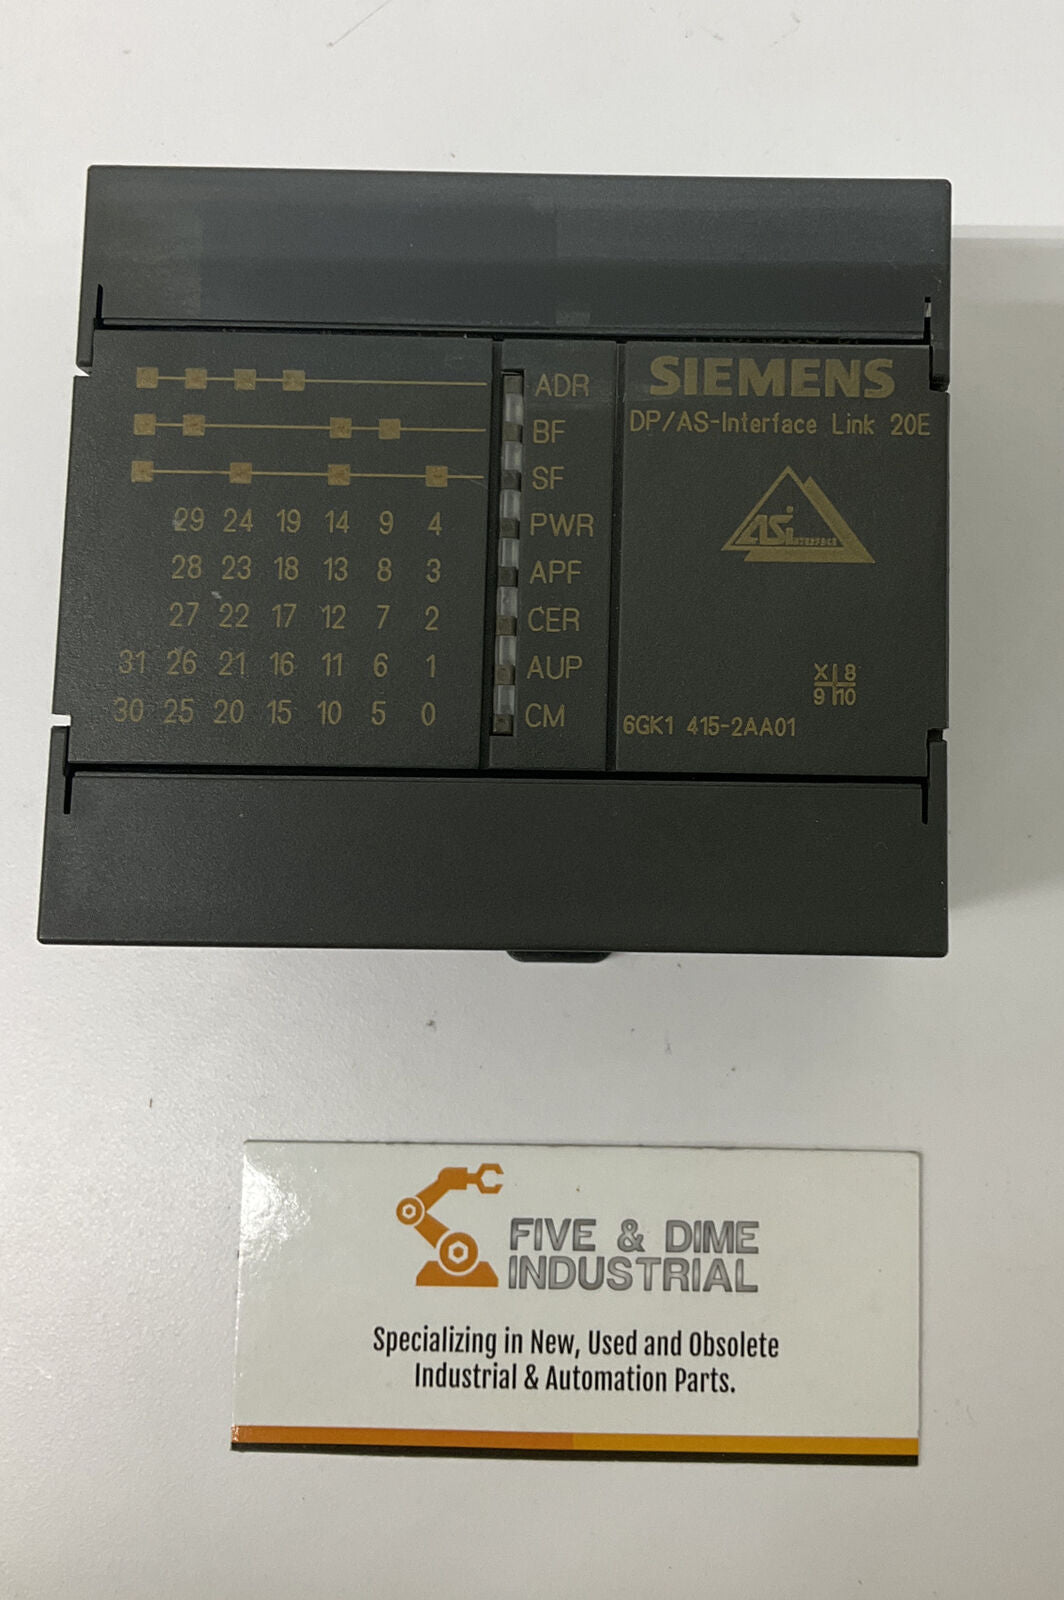 Siemens 6GK1415-2AA01 Simatic Net Link Profibus/AS Interface (GR156)